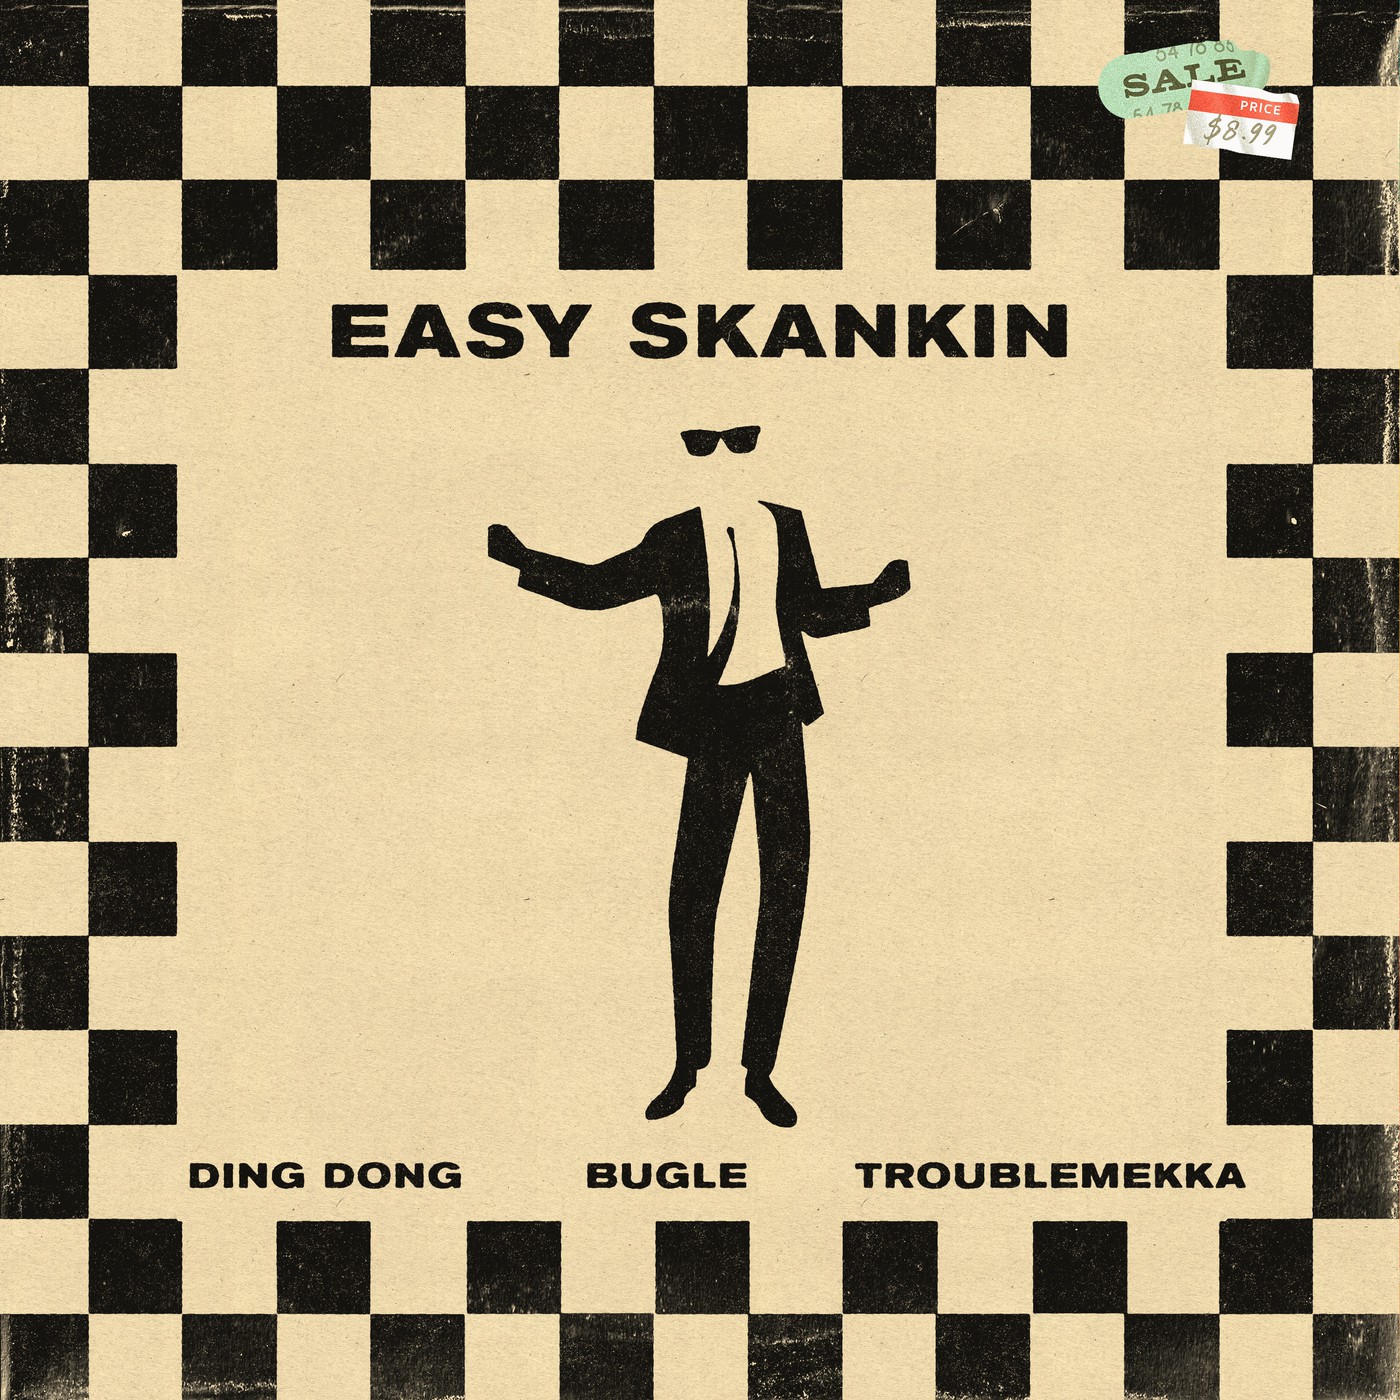 Art for Easy Skankin by Ding Dong, Bugle & Troublemekka